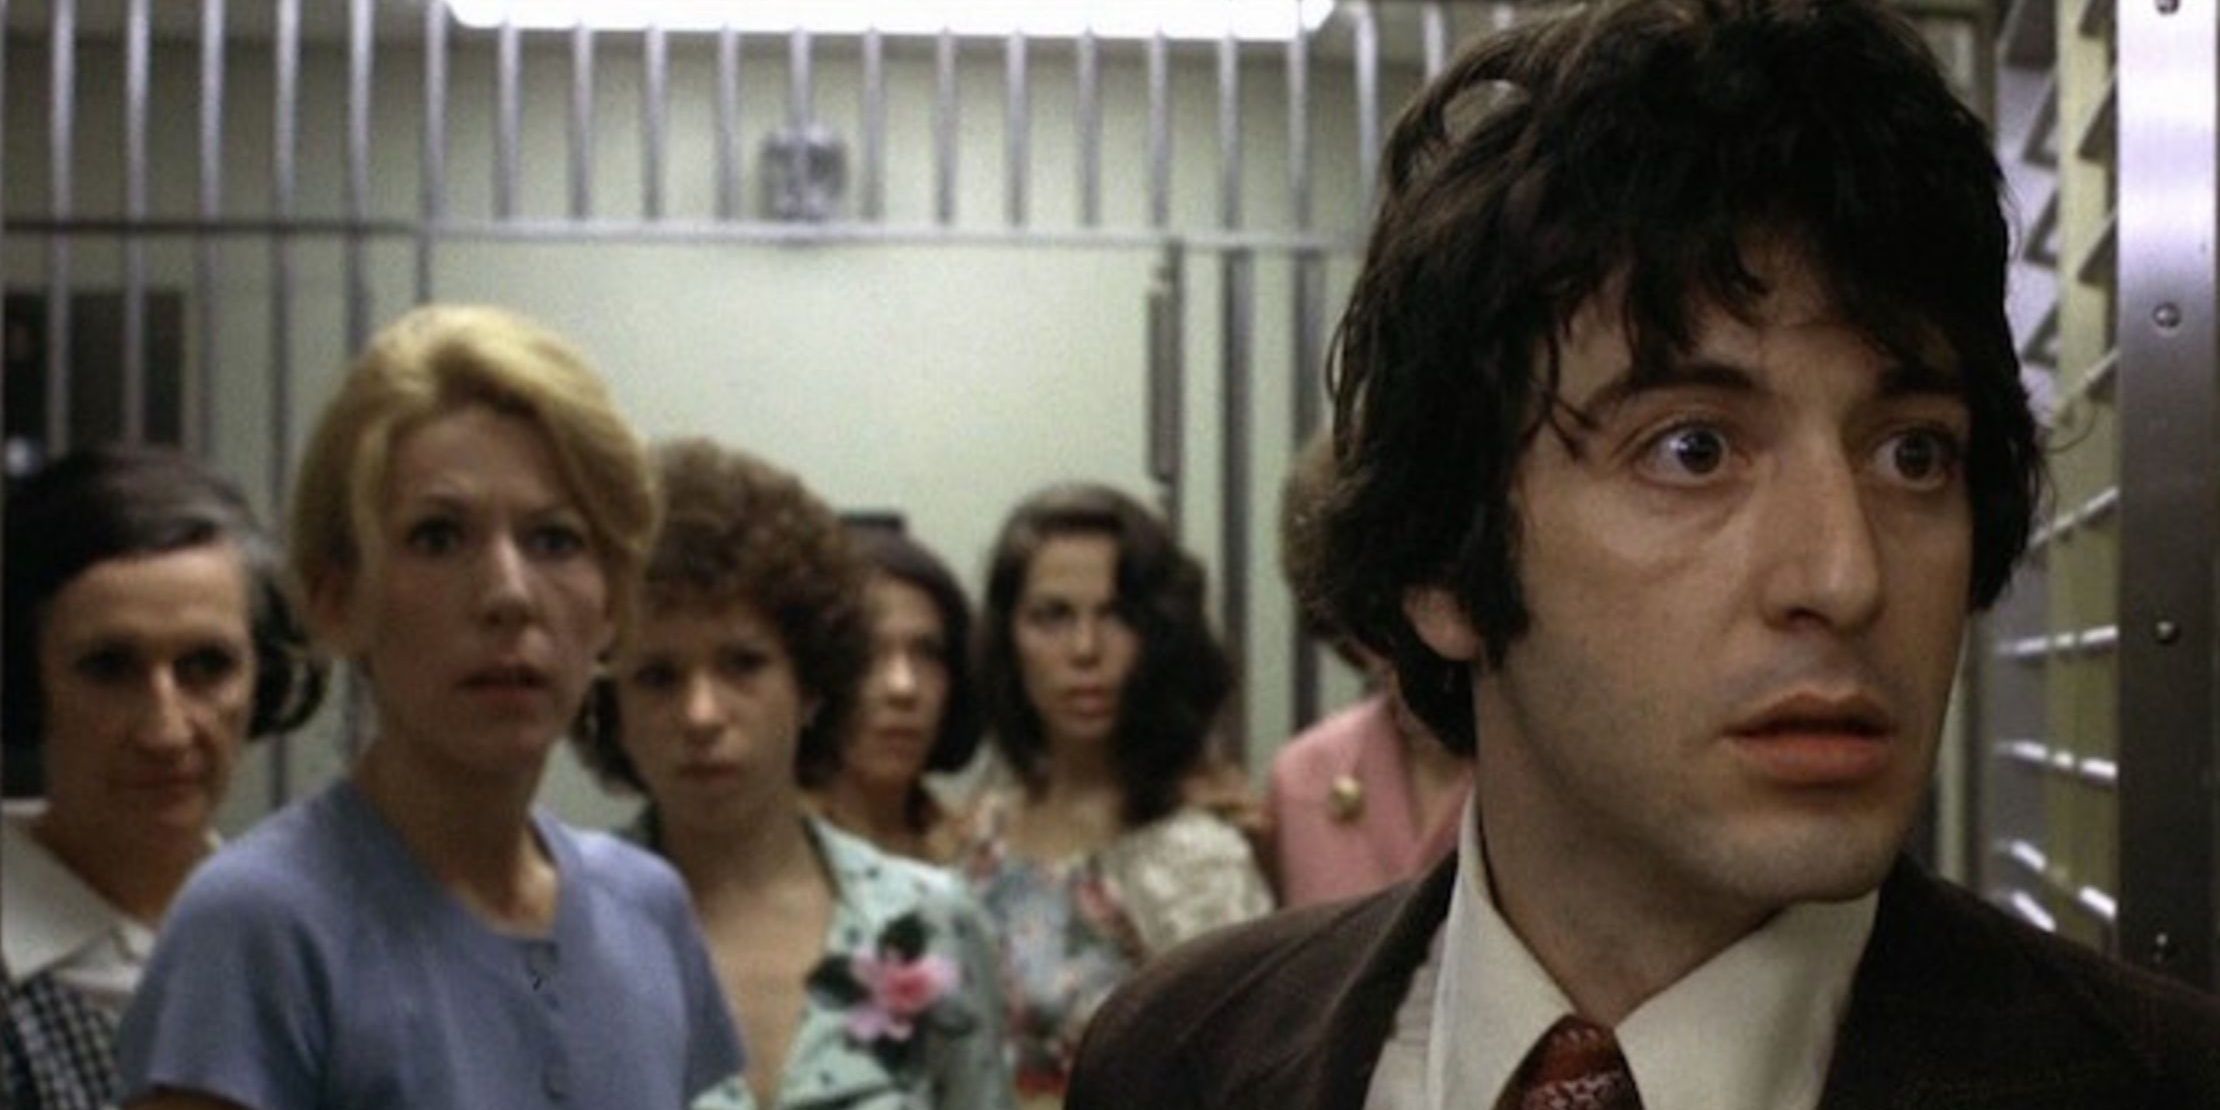 Al Pacino in the precinct with people behind him.